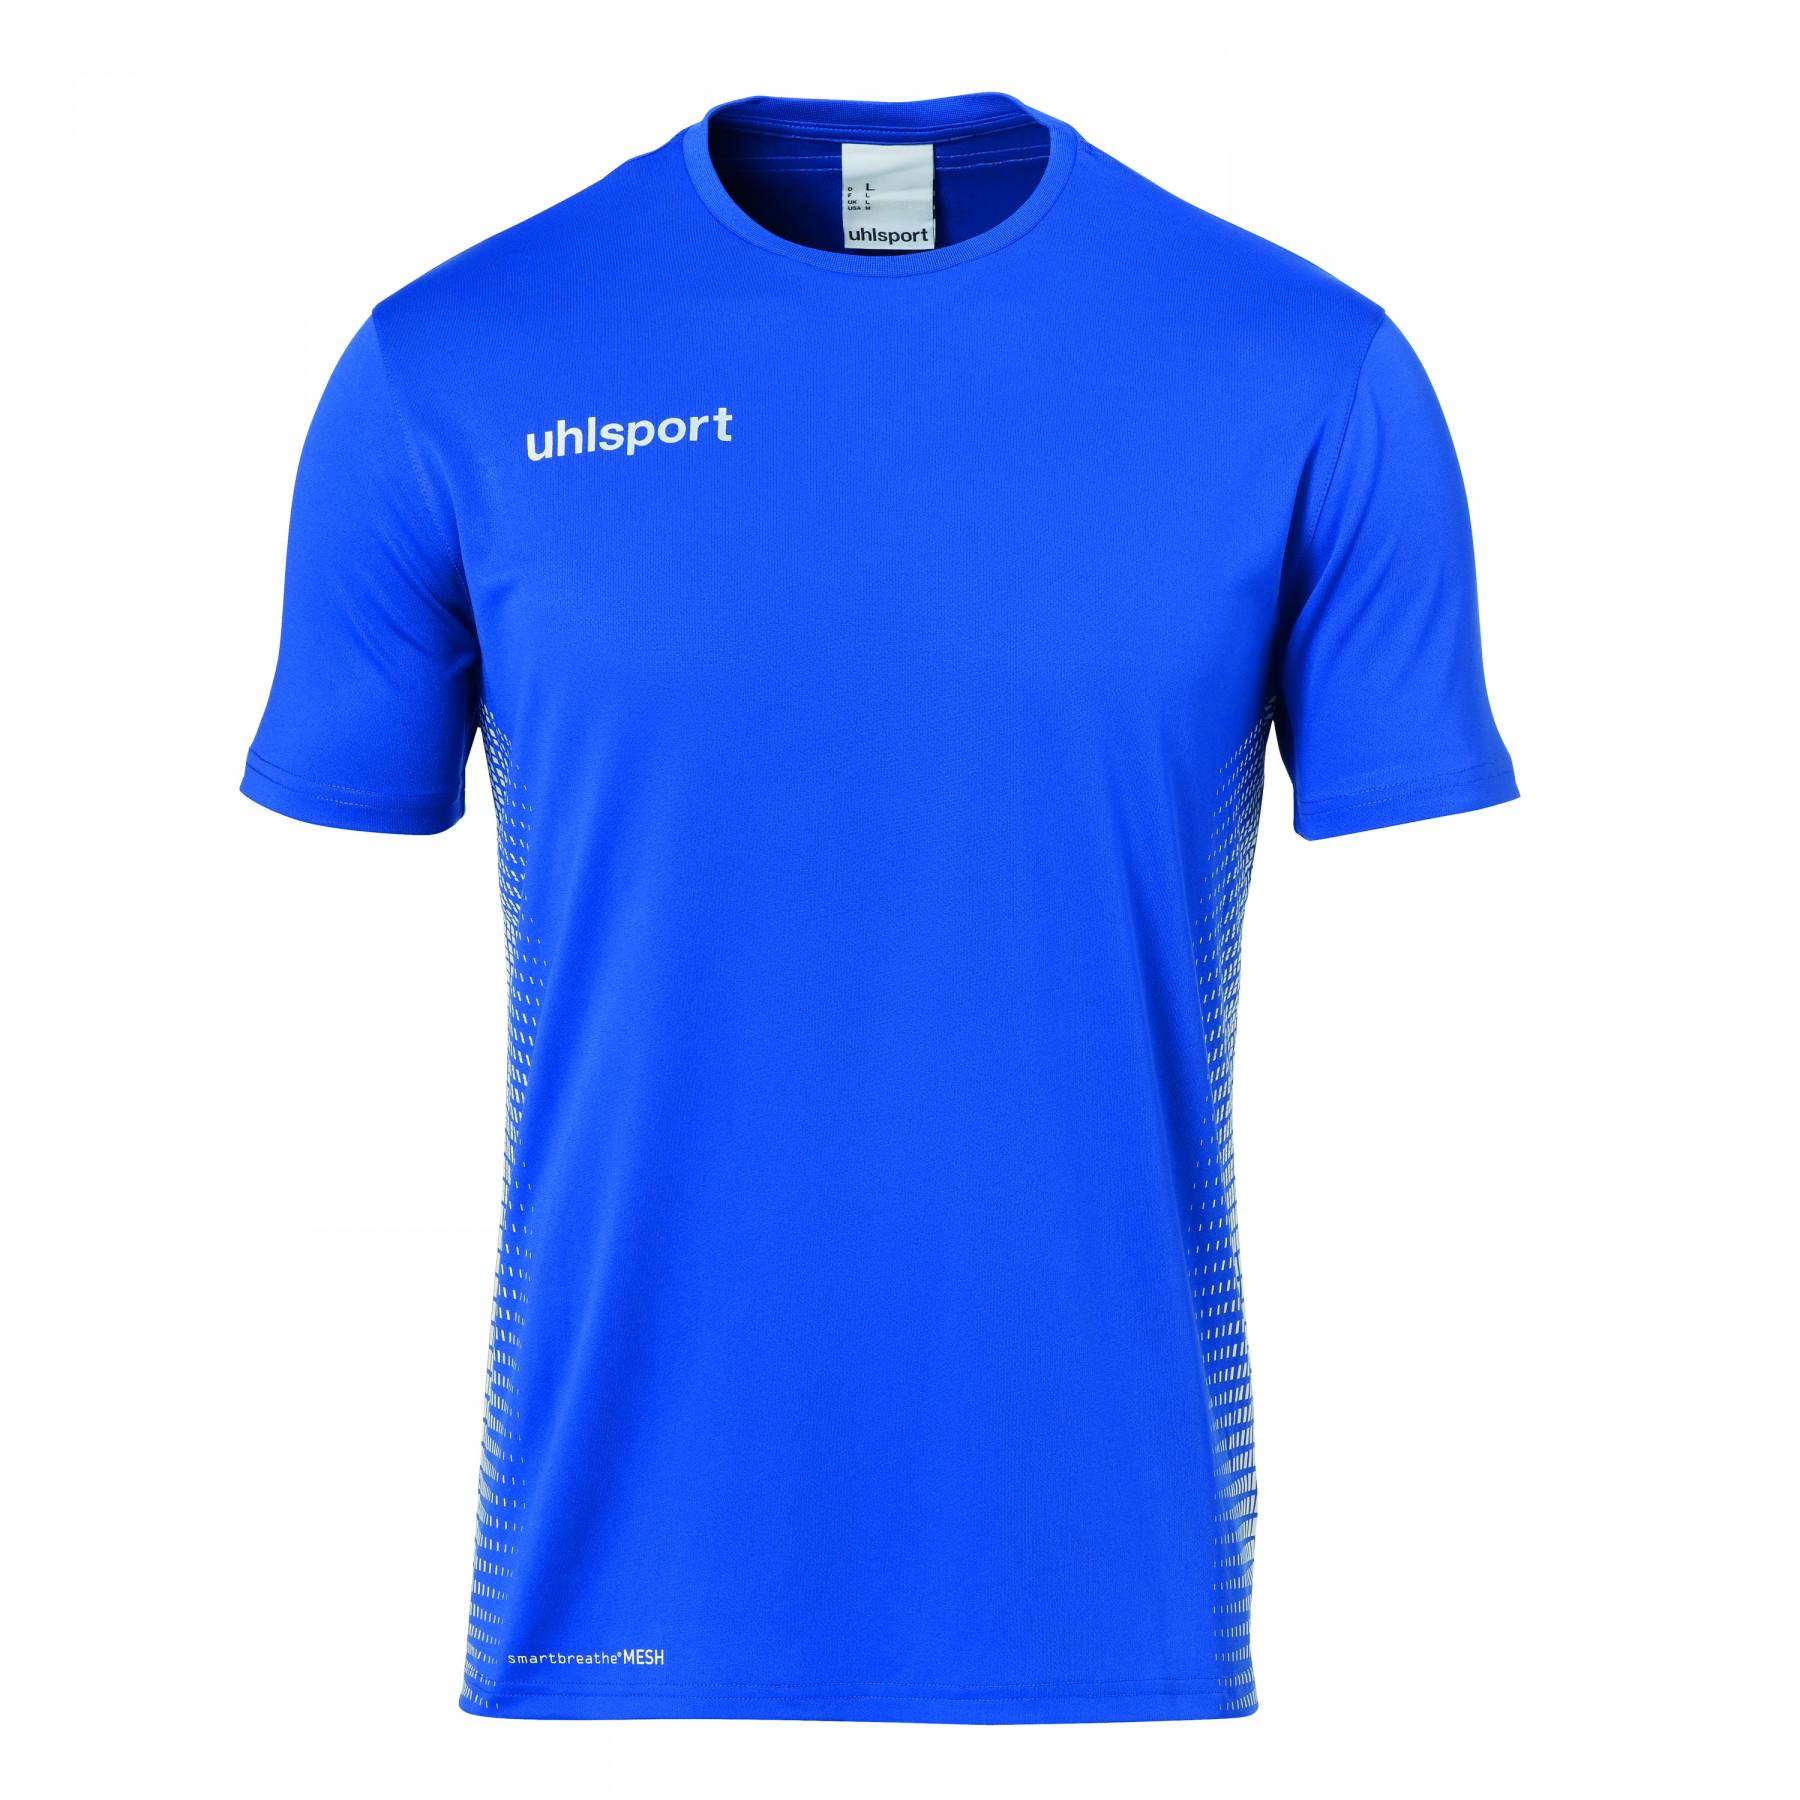 Kit Uhlsport Score - Set of shirt and short - Packs - Club